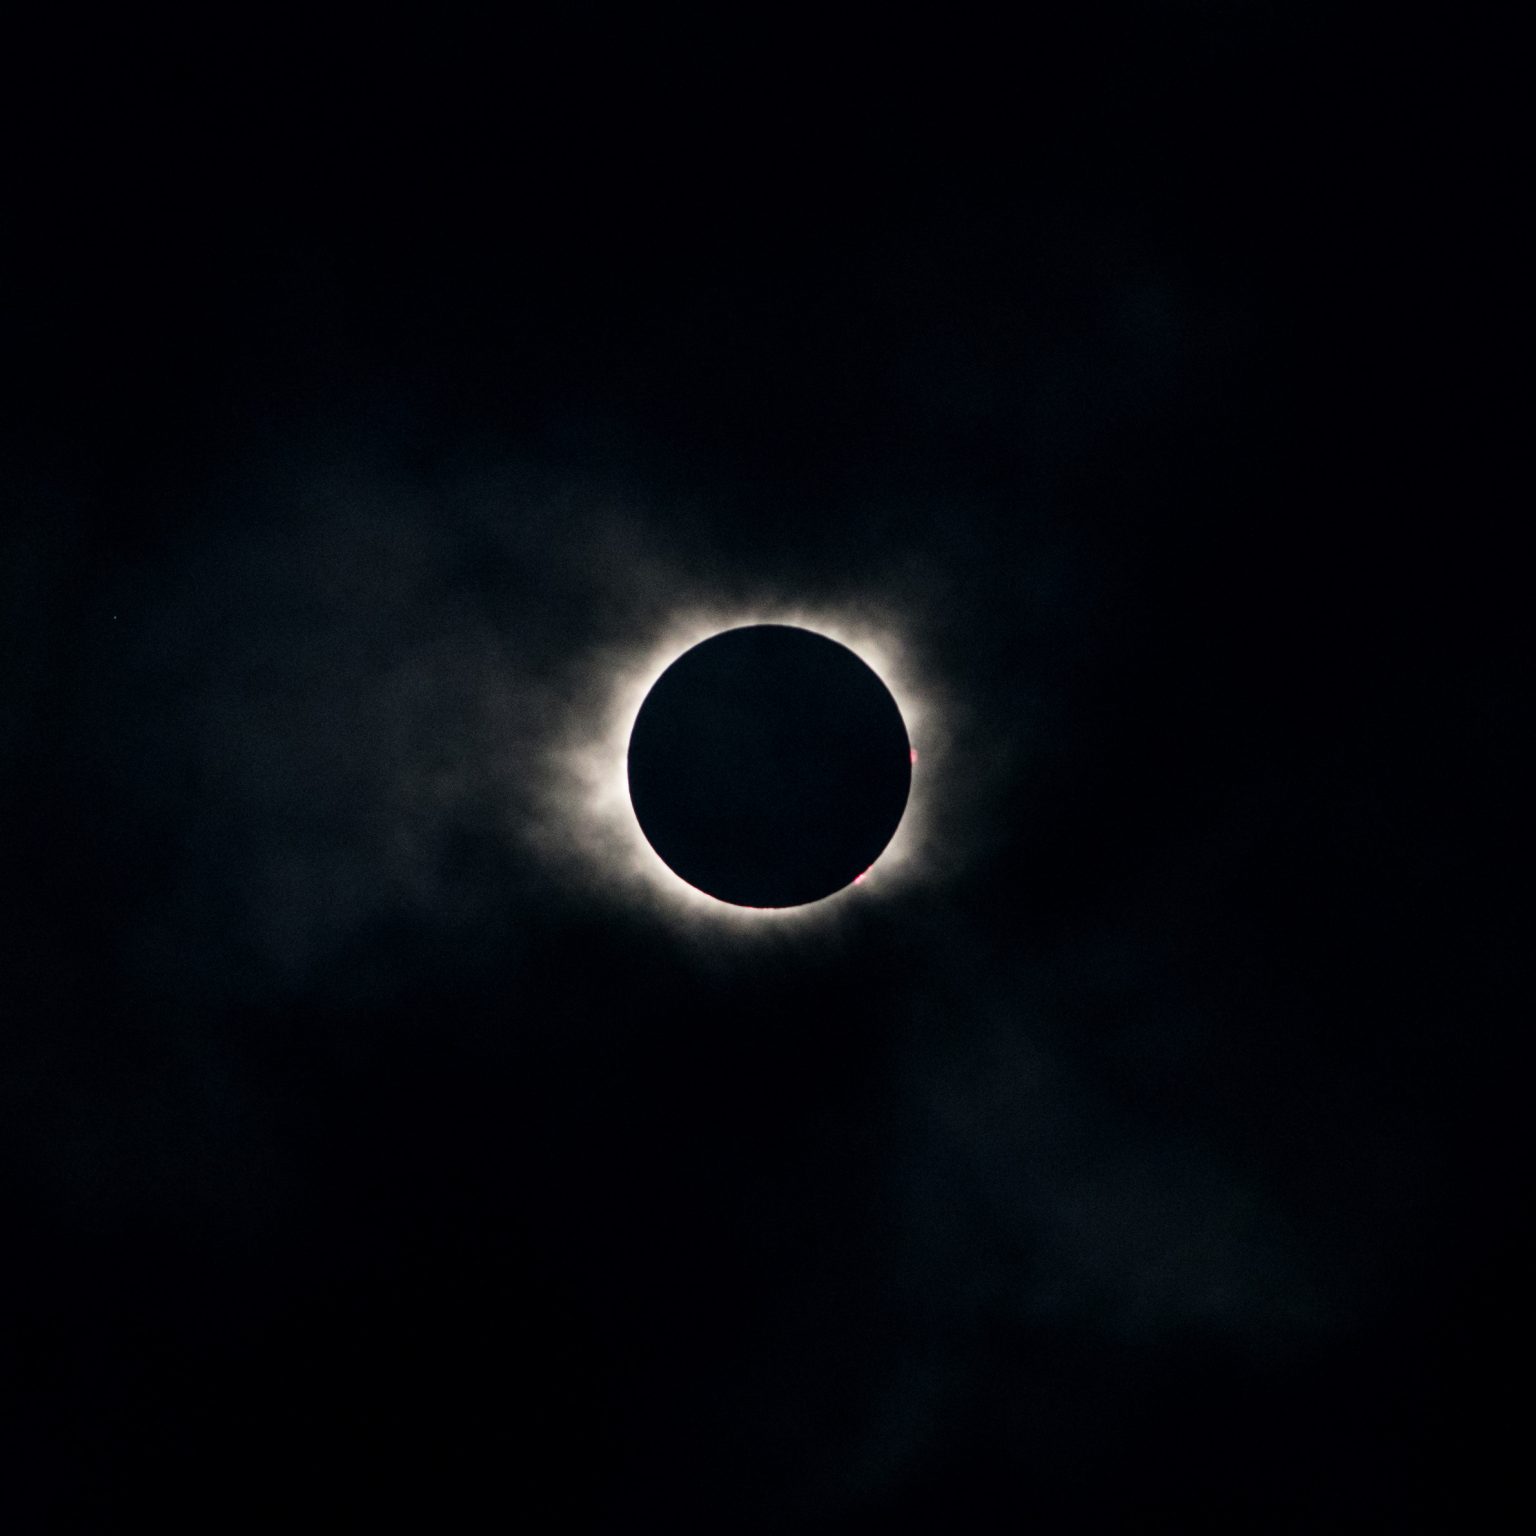 Total solar eclipse in Nashville, TN on August 21, 2017.